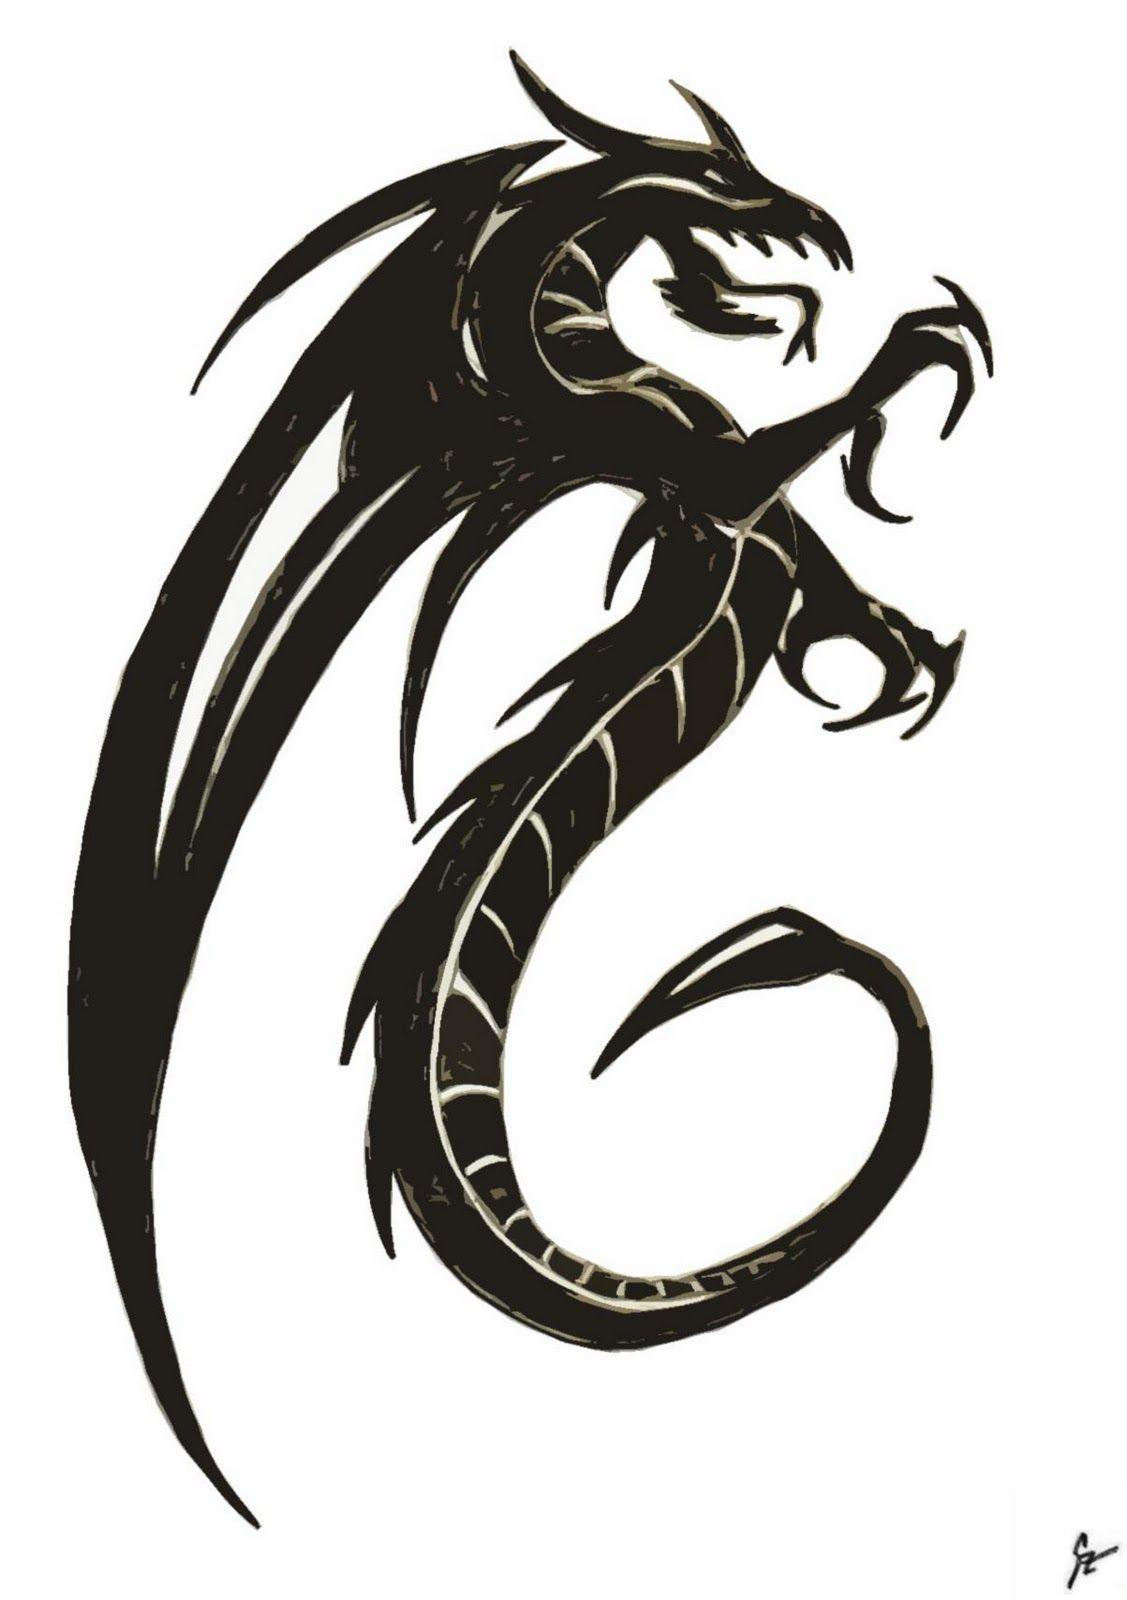 Easy Black and White Logo - Free Black And White Dragon, Download Free Clip Art, Free Clip Art ...